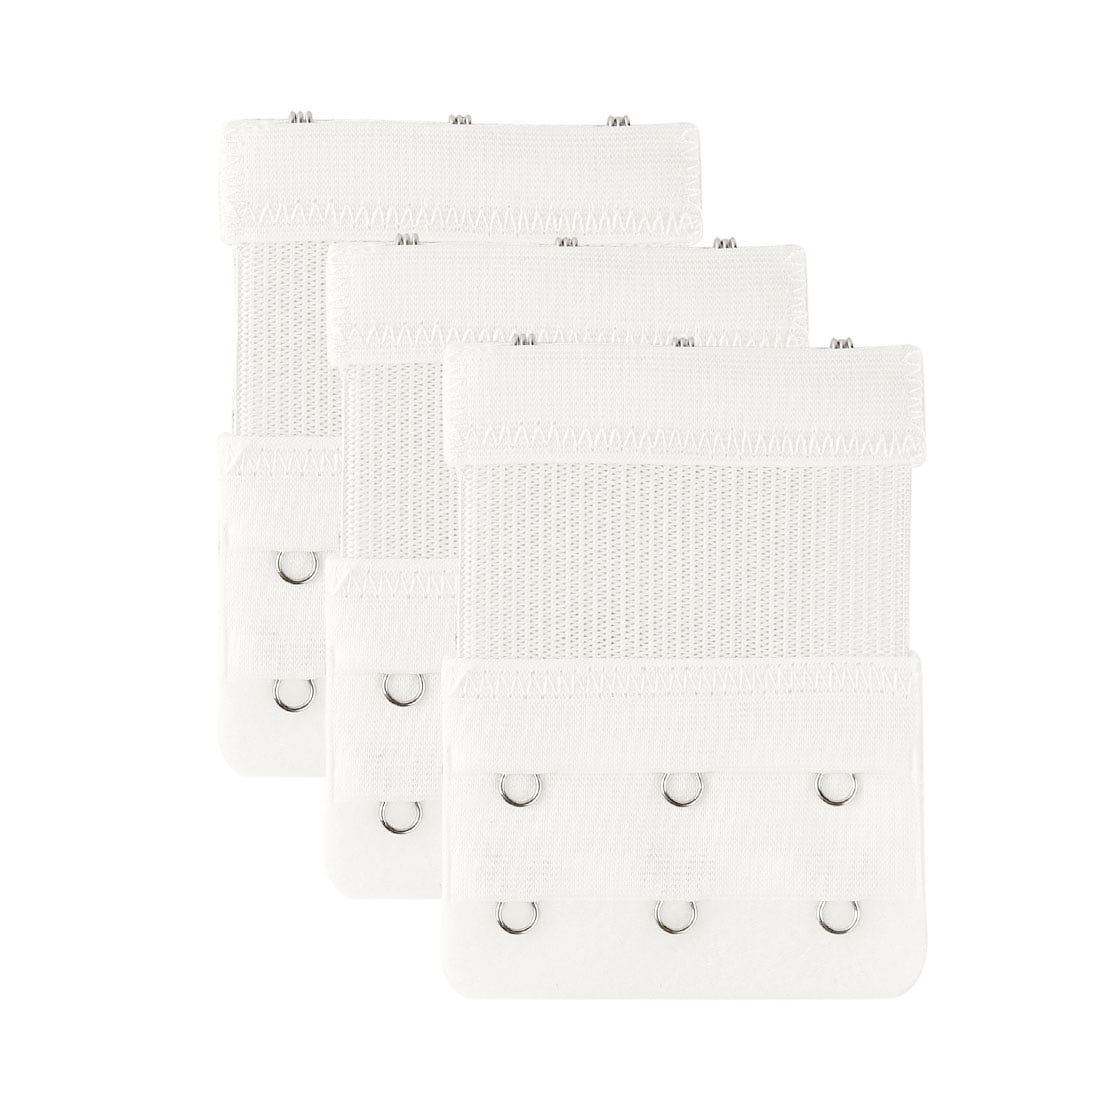 Bra Extenders 3-pack with Elastic Panel 444 - Beige/Black/White